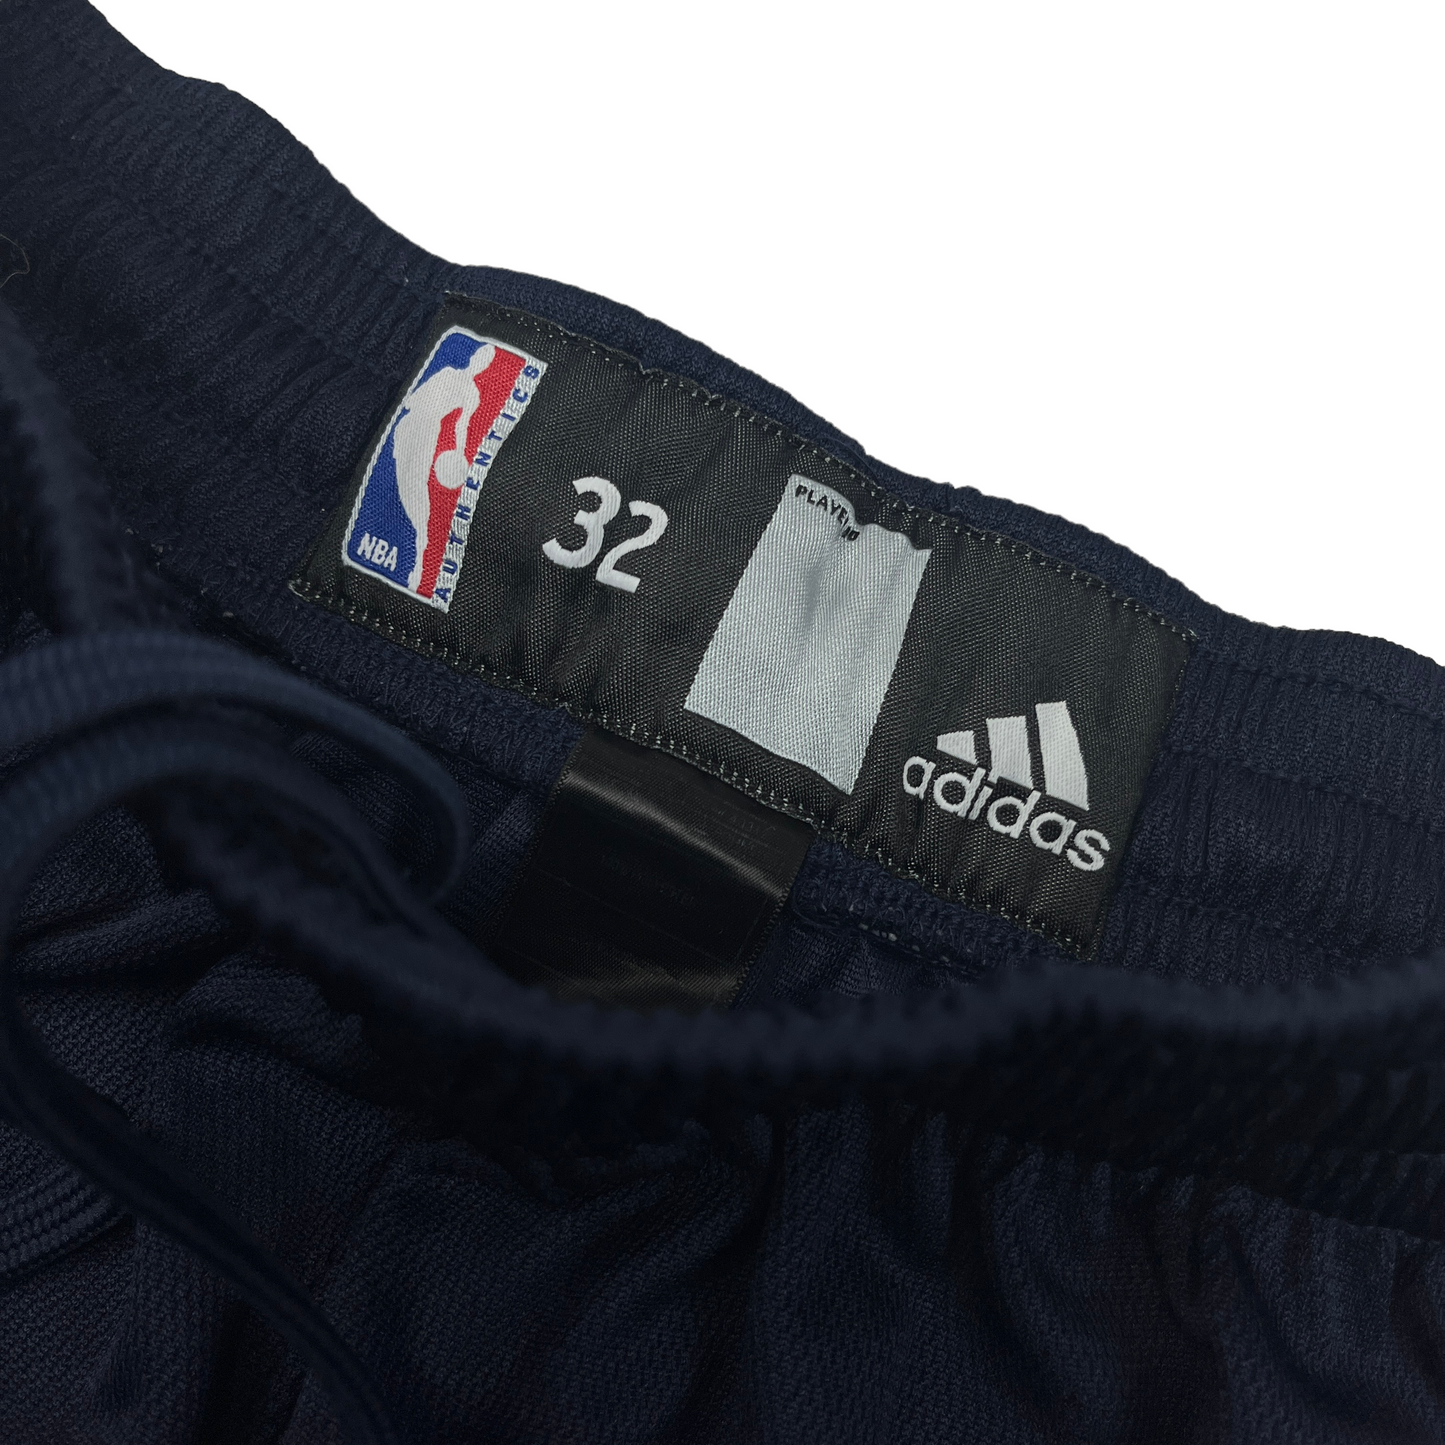 01604 Adidas New York Nets Shorts